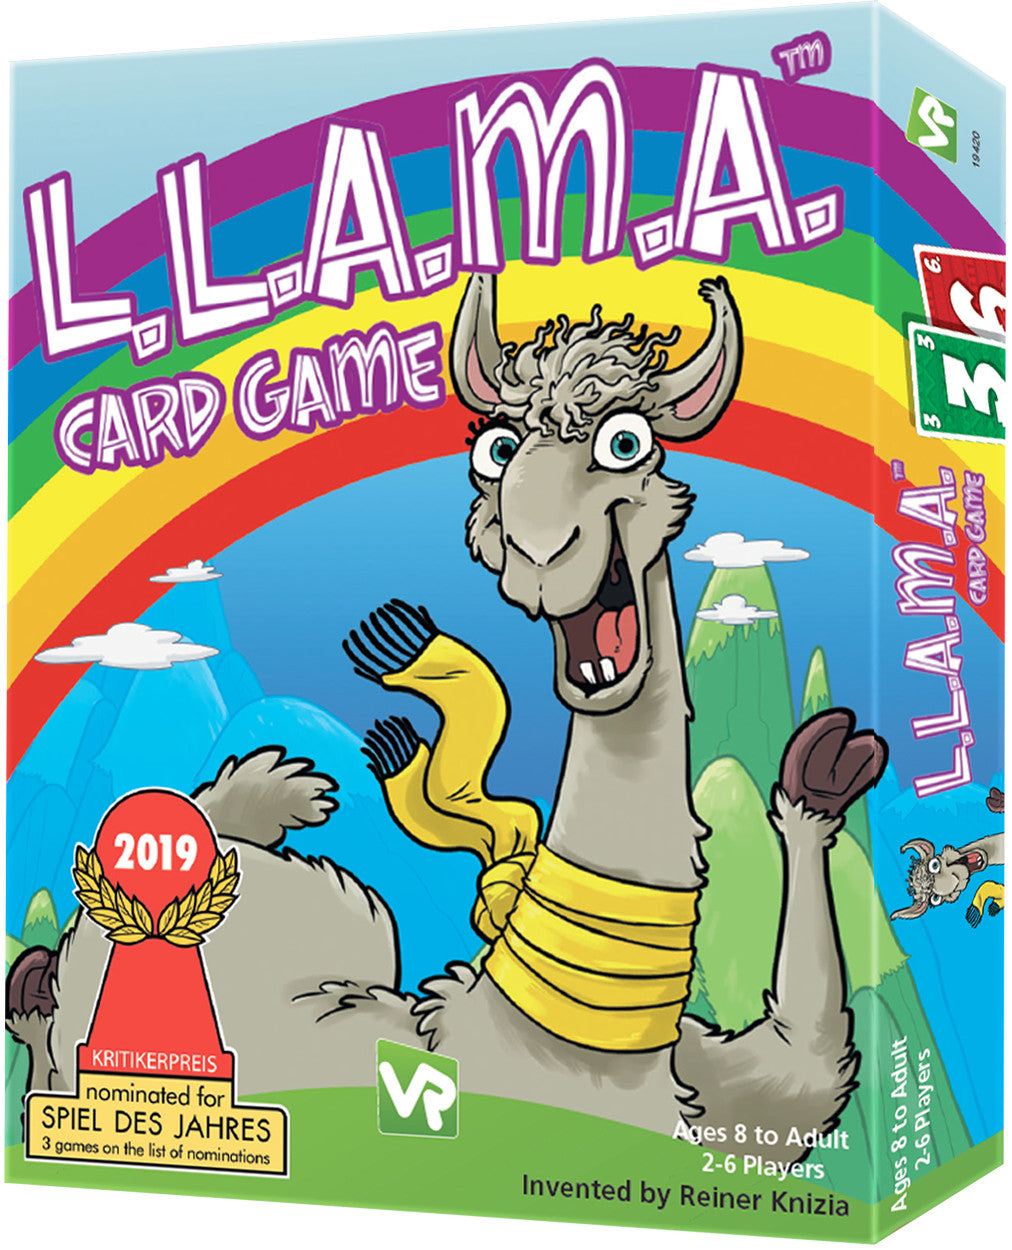 LLAMA Card Game